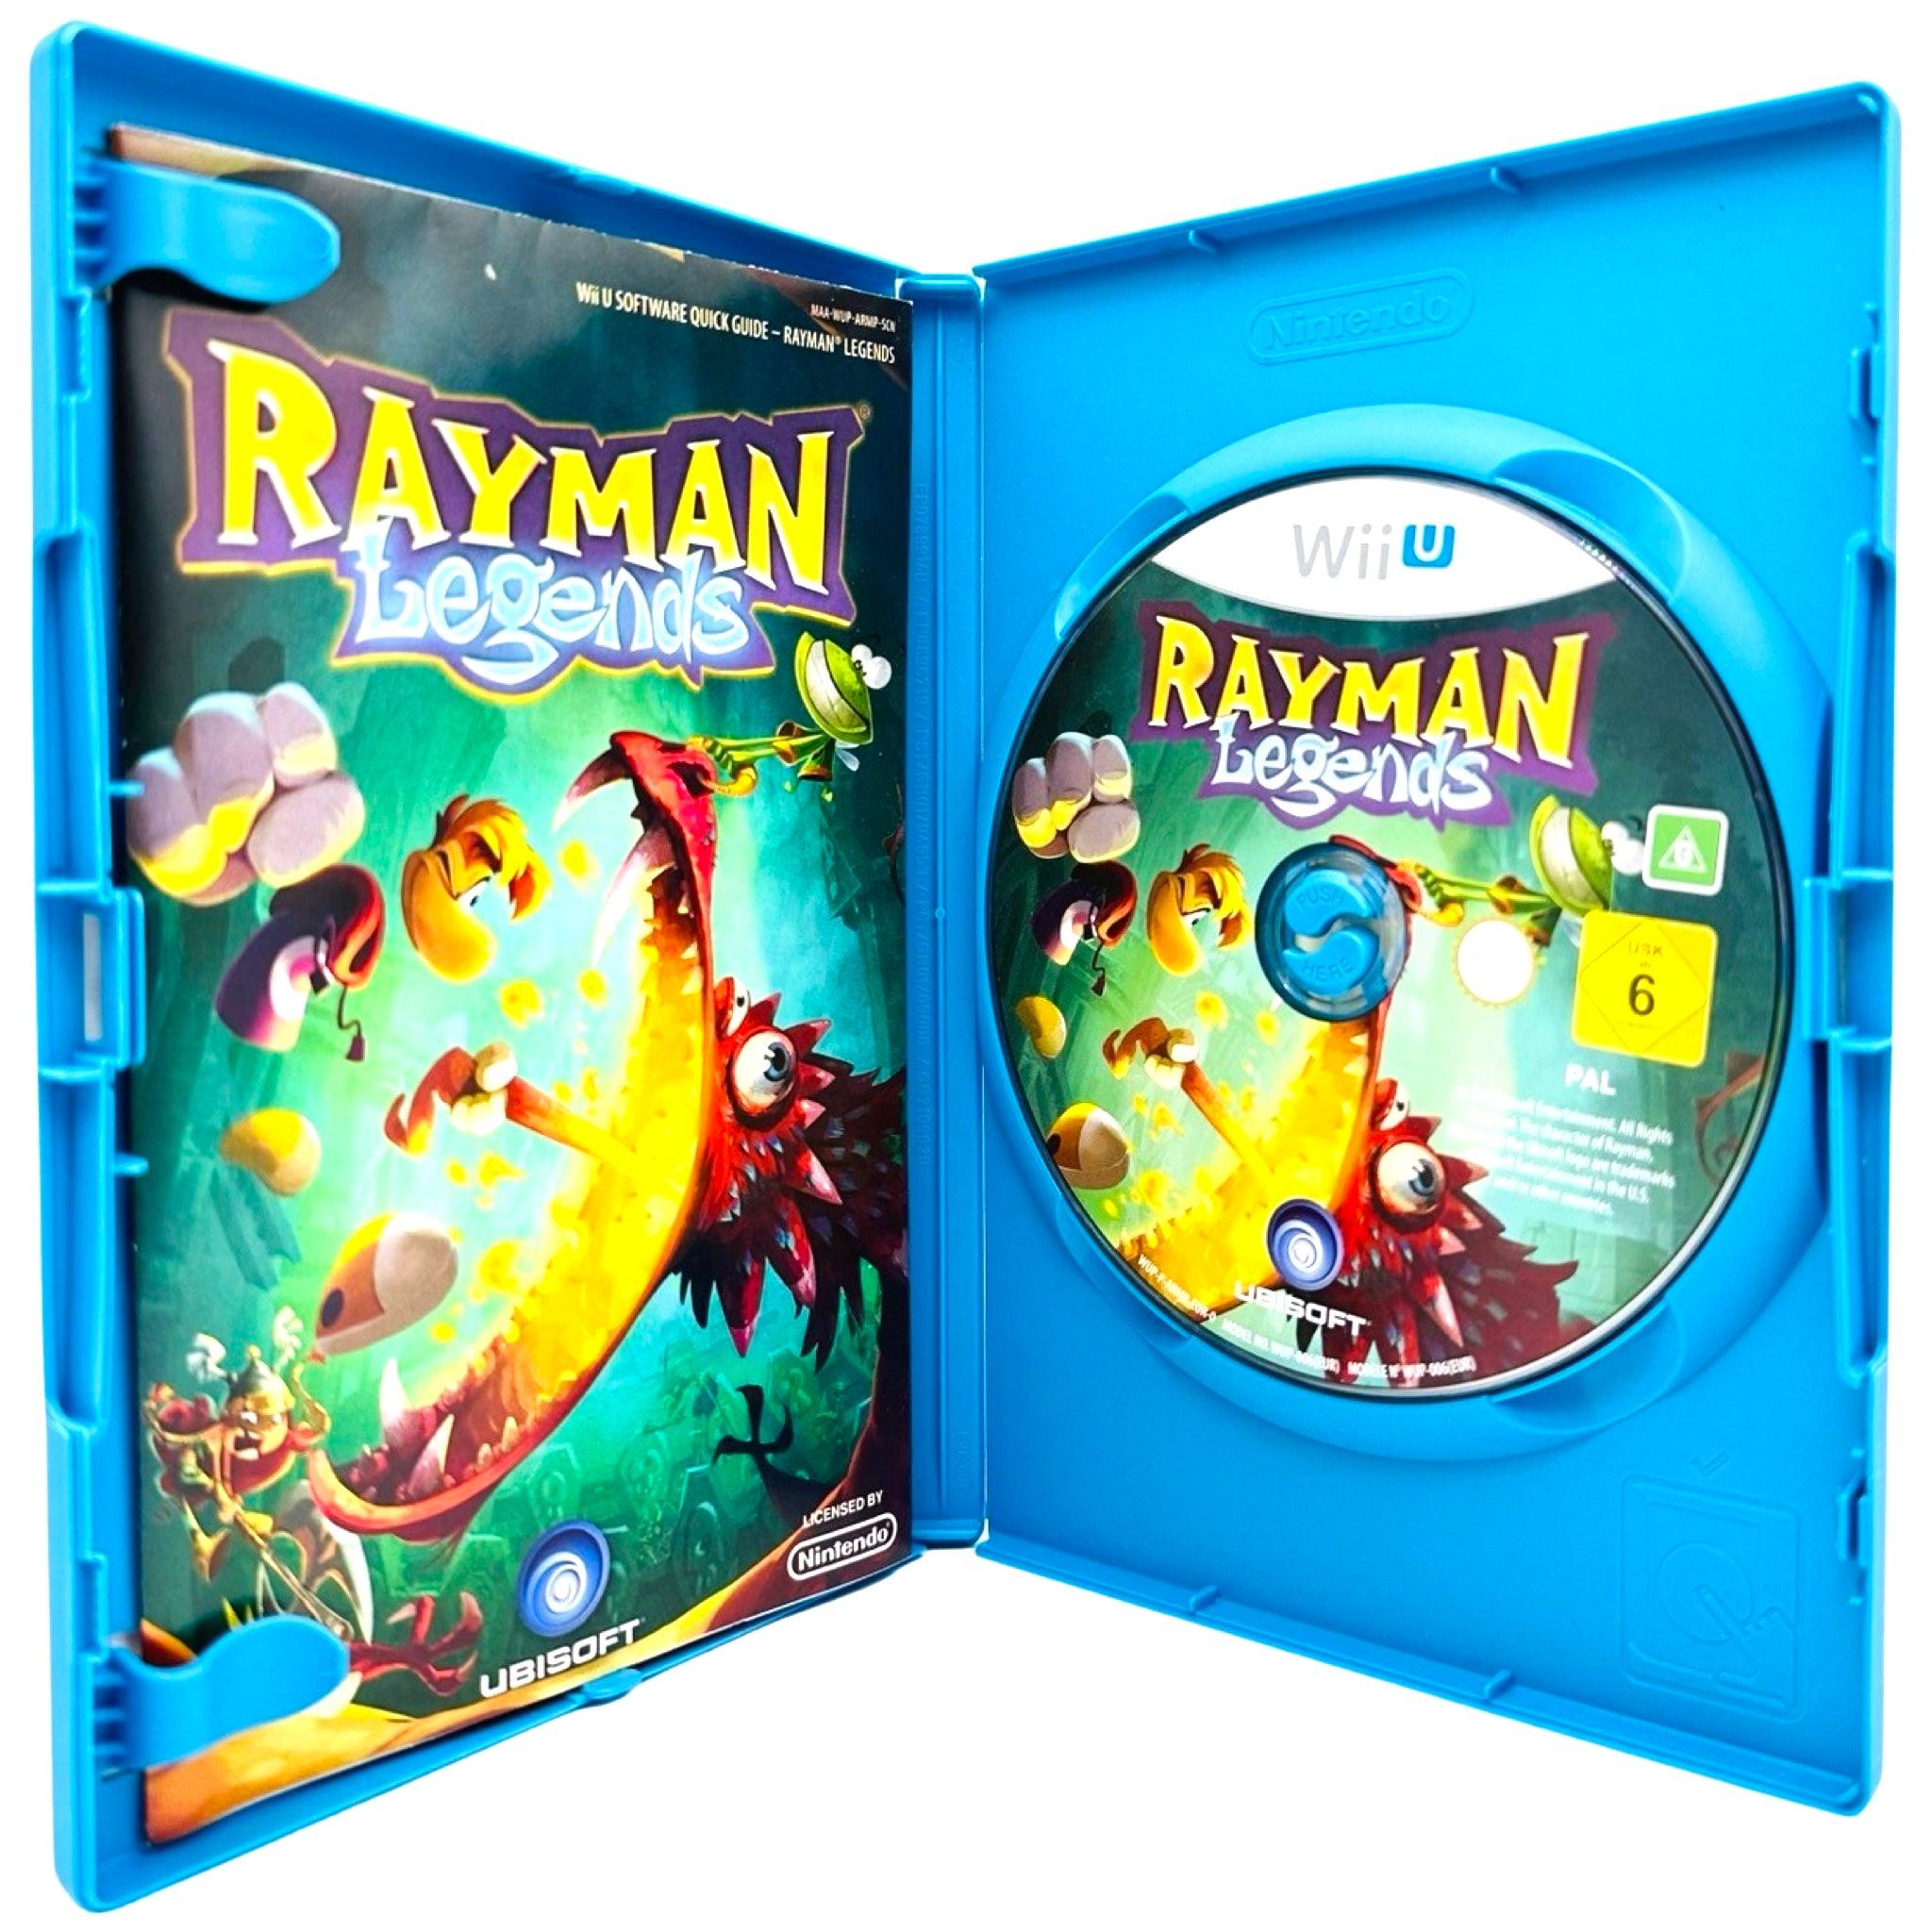 Wii U: Rayman Legends - RetroGaming.no